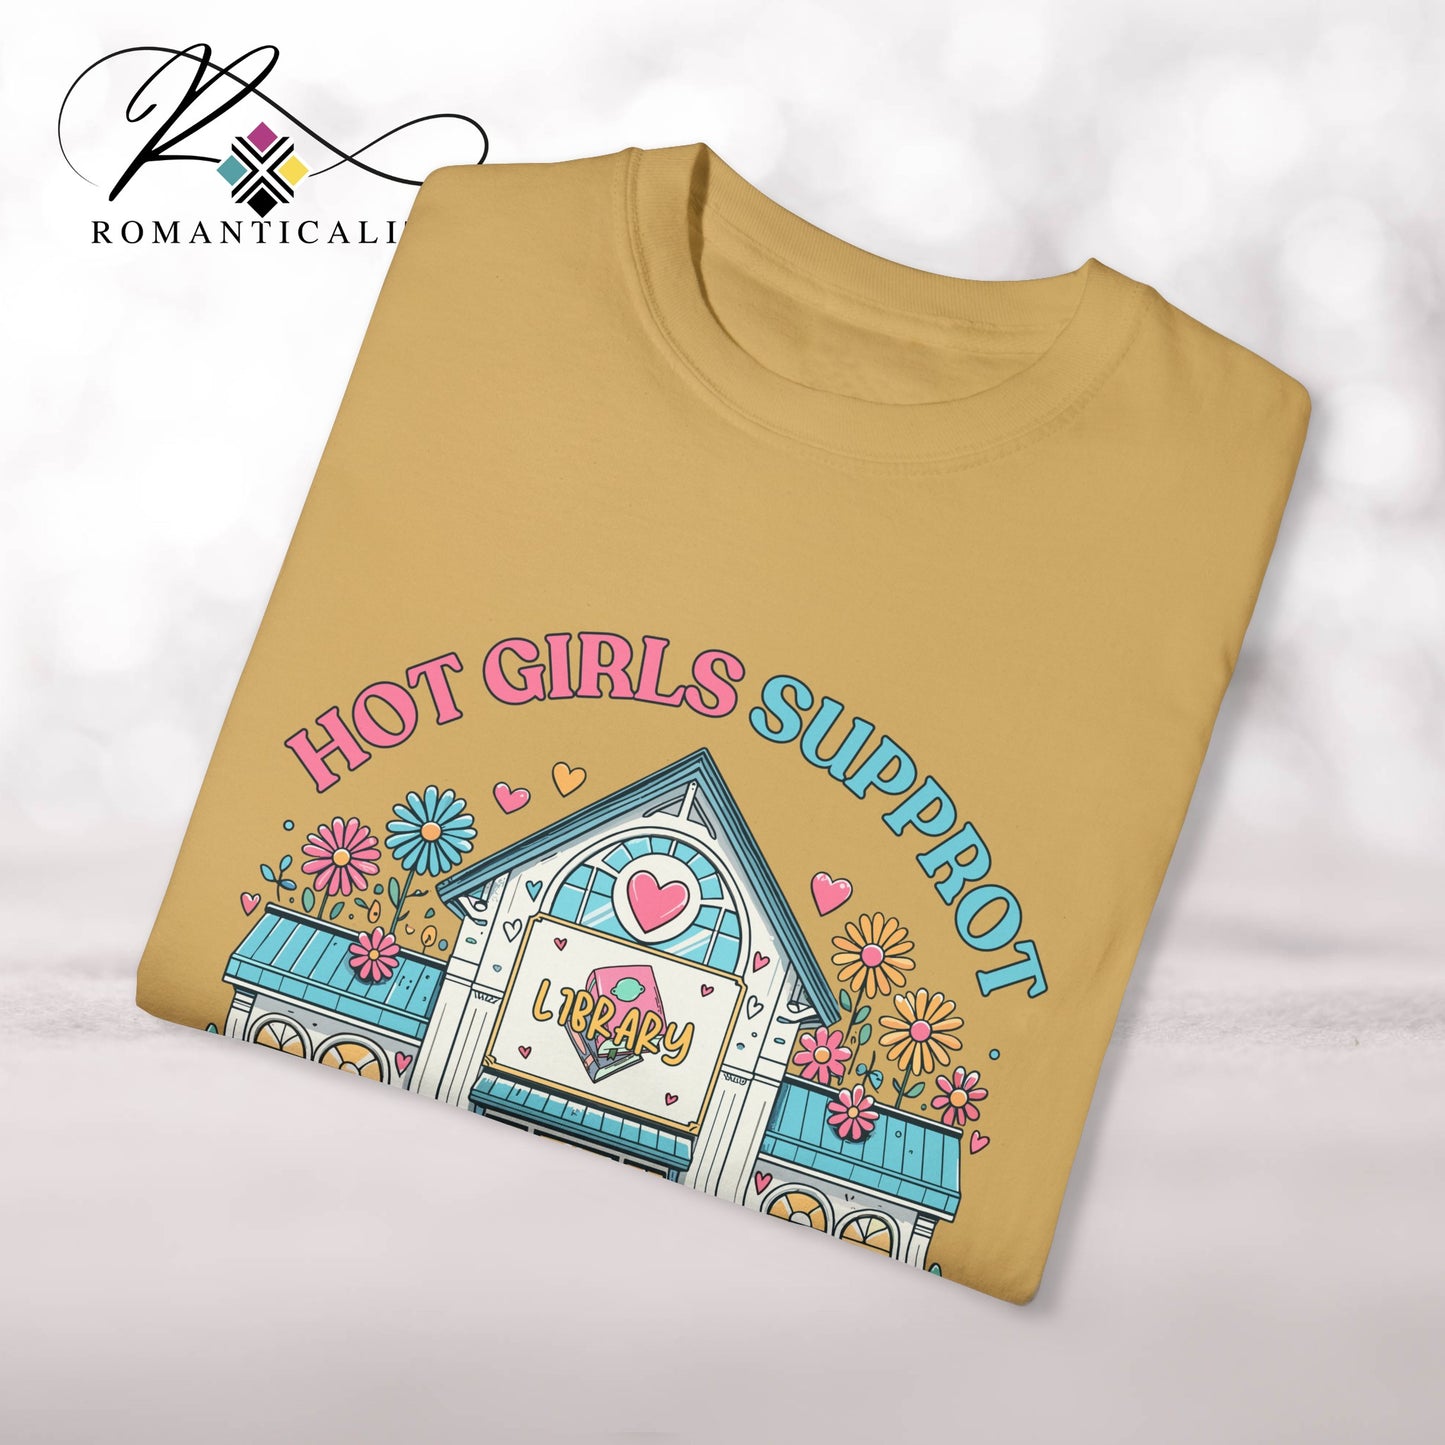 Hot Girls Support Local Library Shirt-Sassy Woman Tee-Reader & Writer Graphic T-shirt-Women's Graphic T-Shirt-Women's Book Lover Top